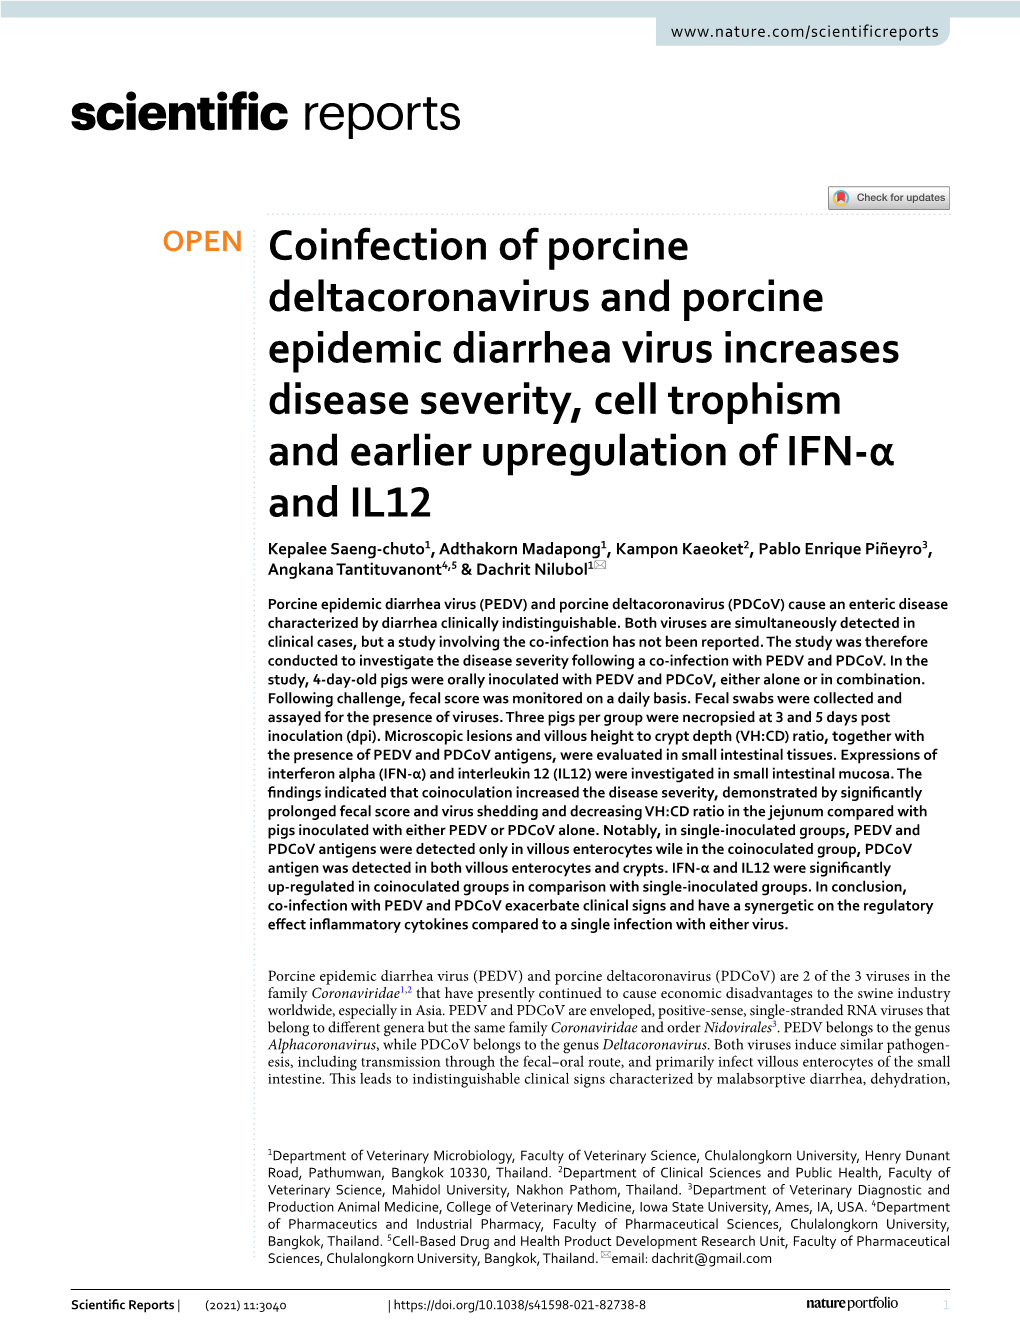 Coinfection of Porcine Deltacoronavirus and Porcine